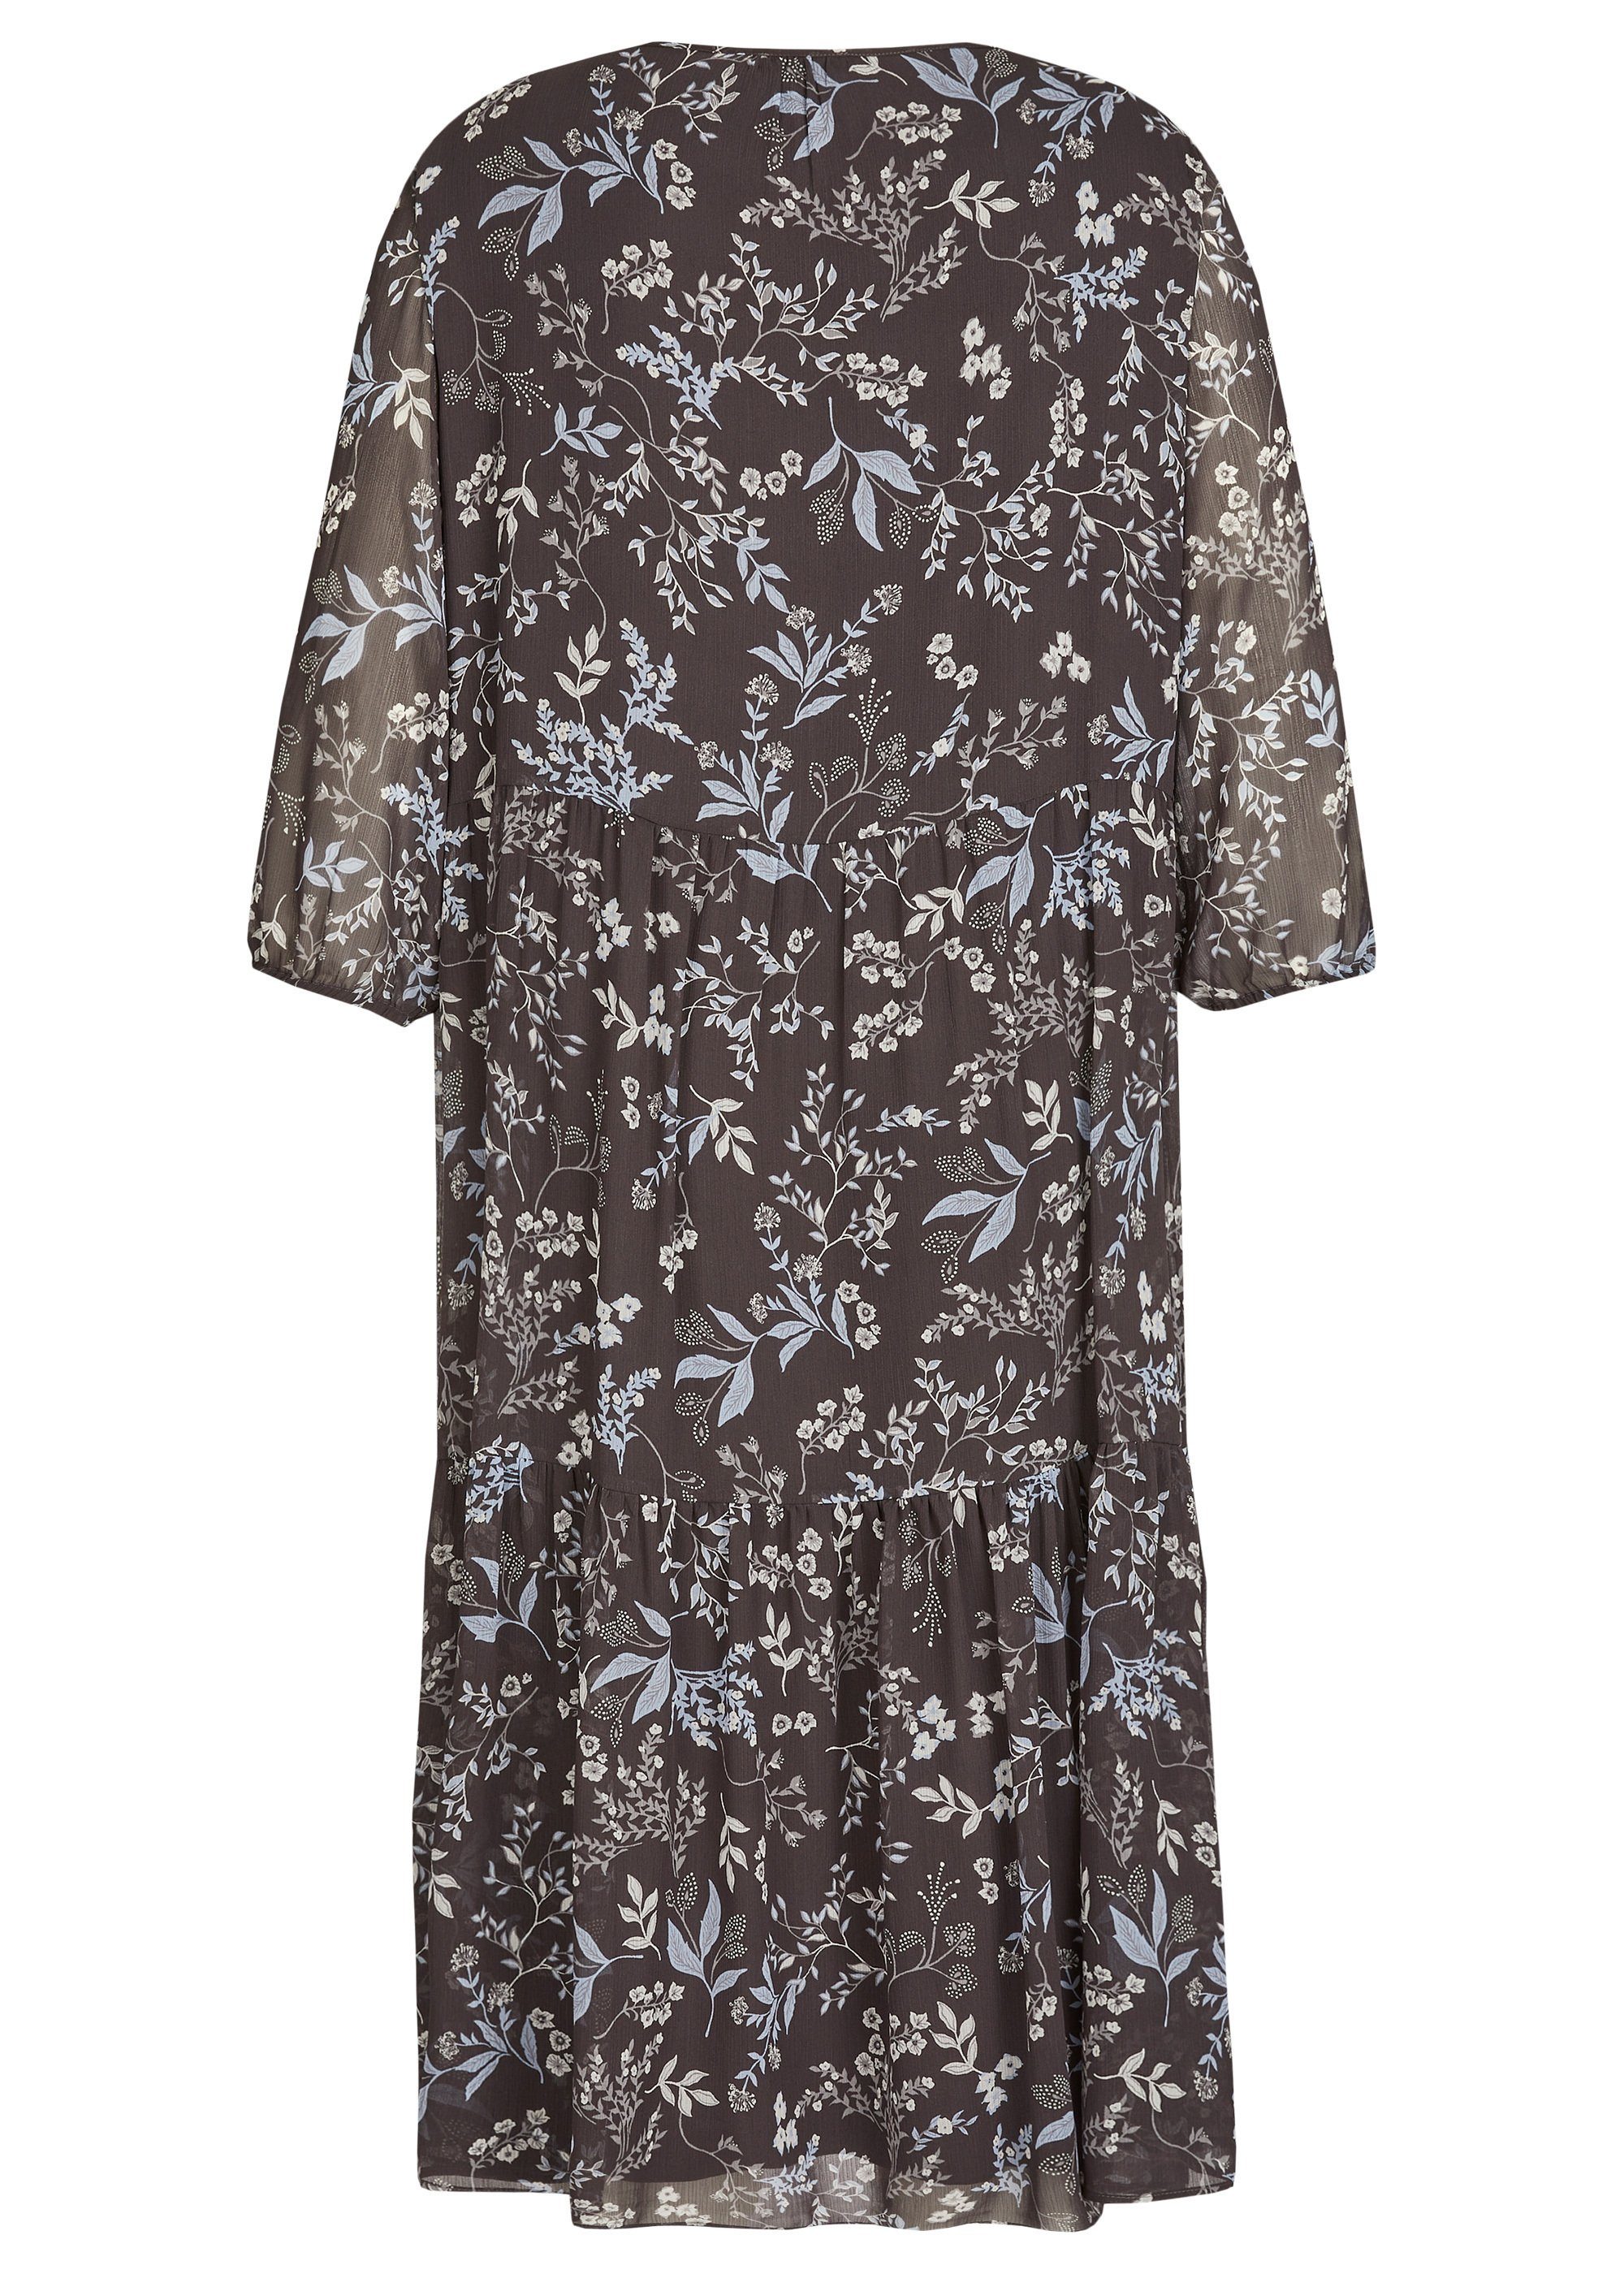 VIA APPIA floralem DUE mit Stufenkleid Allover-Print A-Linien-Kleid Verspieltes